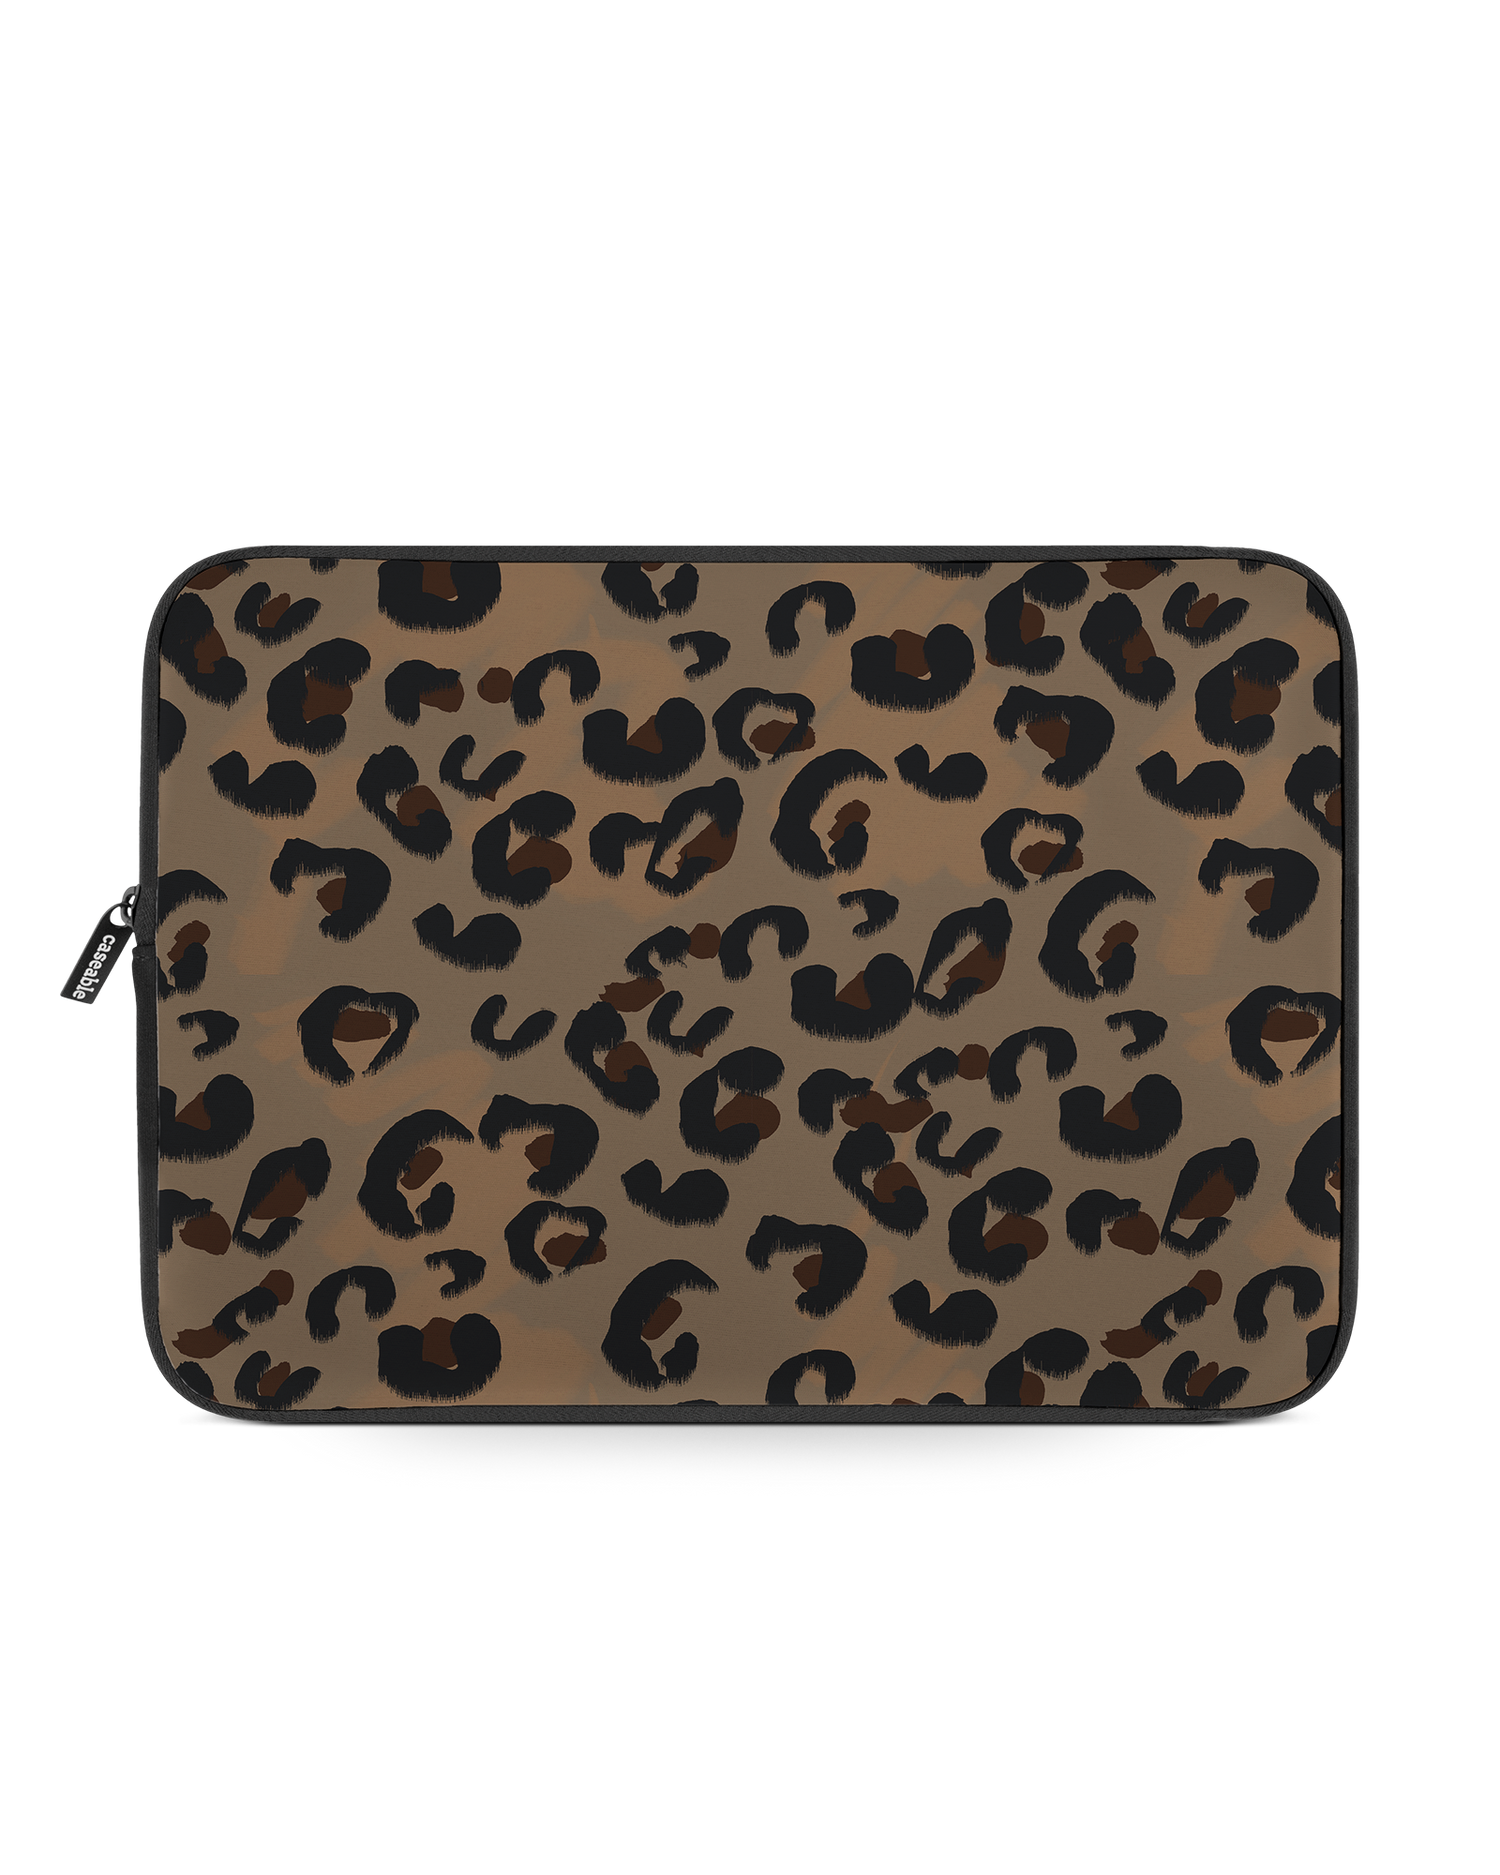 Leopard Repeat Laptop Case 13-14 inch: Front View